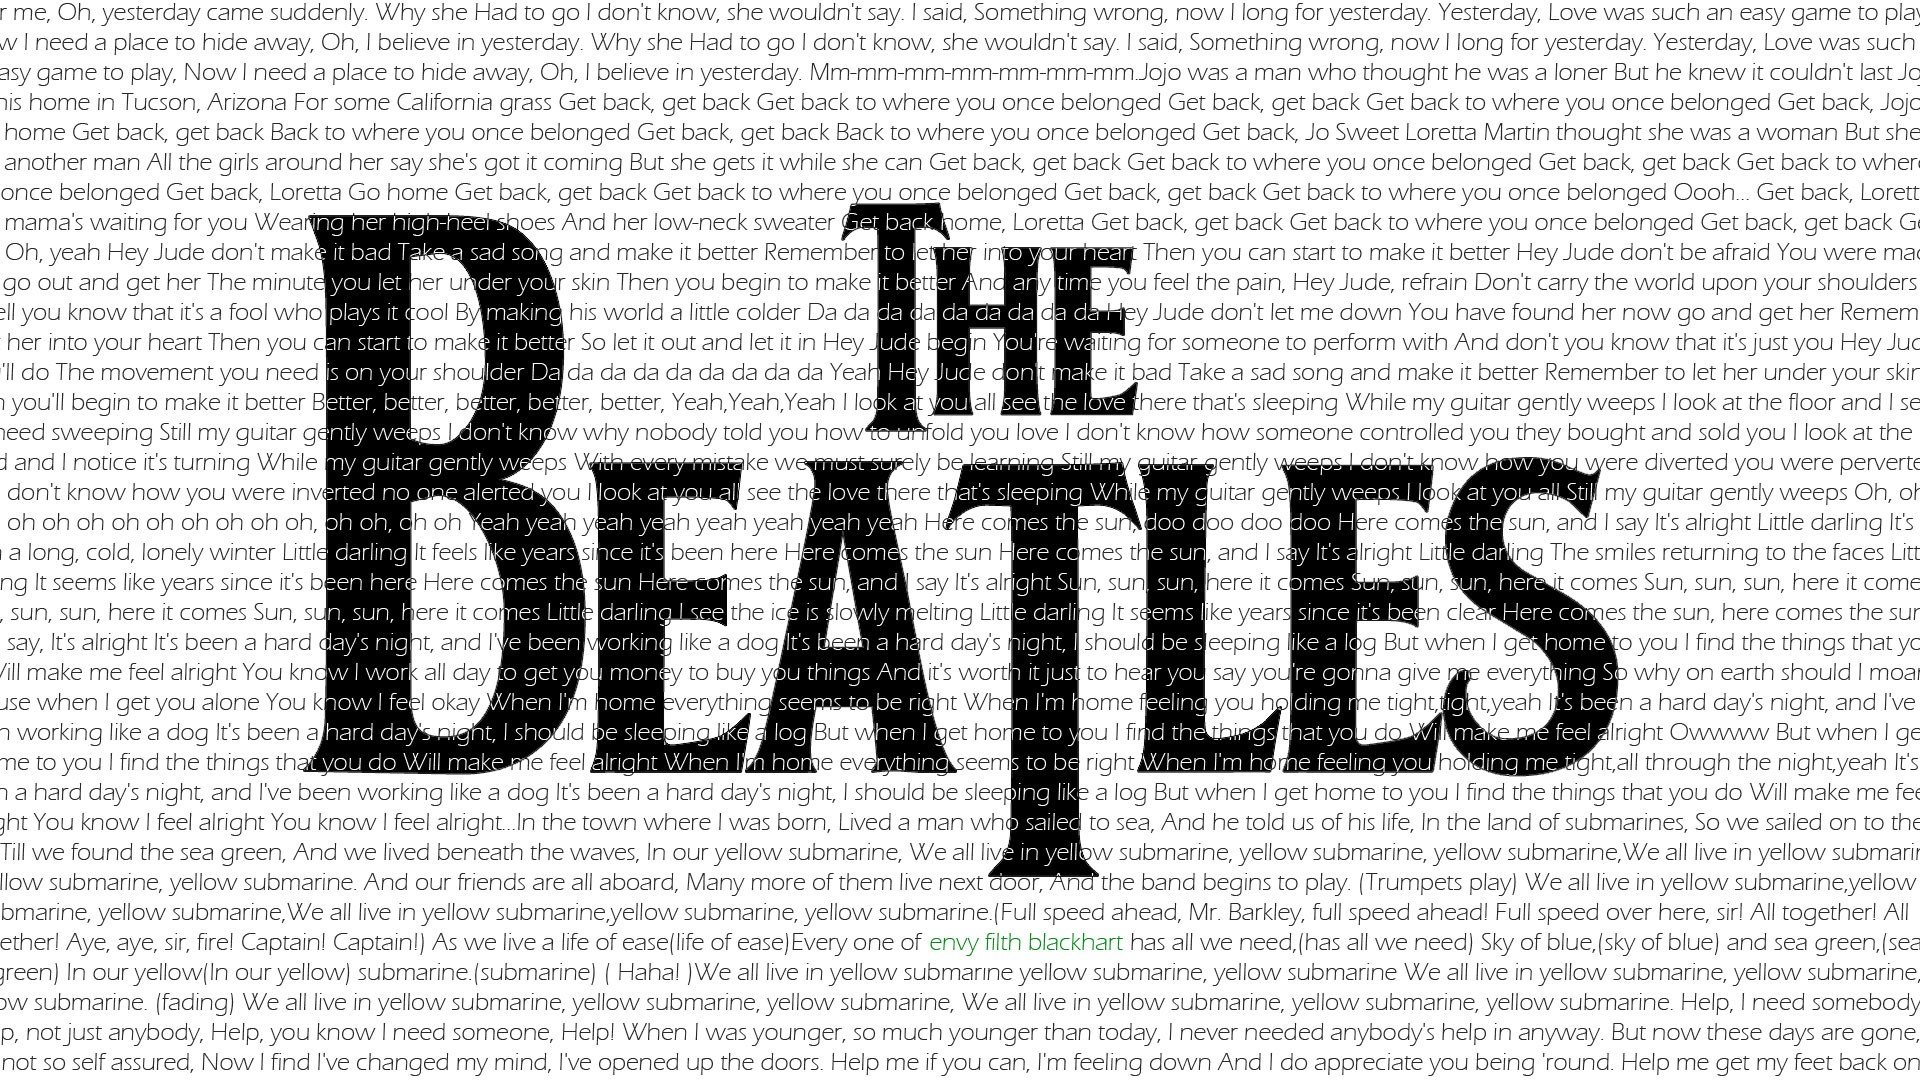 The Beatles Wallpapers 19x1080 Full Hd 1080p Desktop Backgrounds